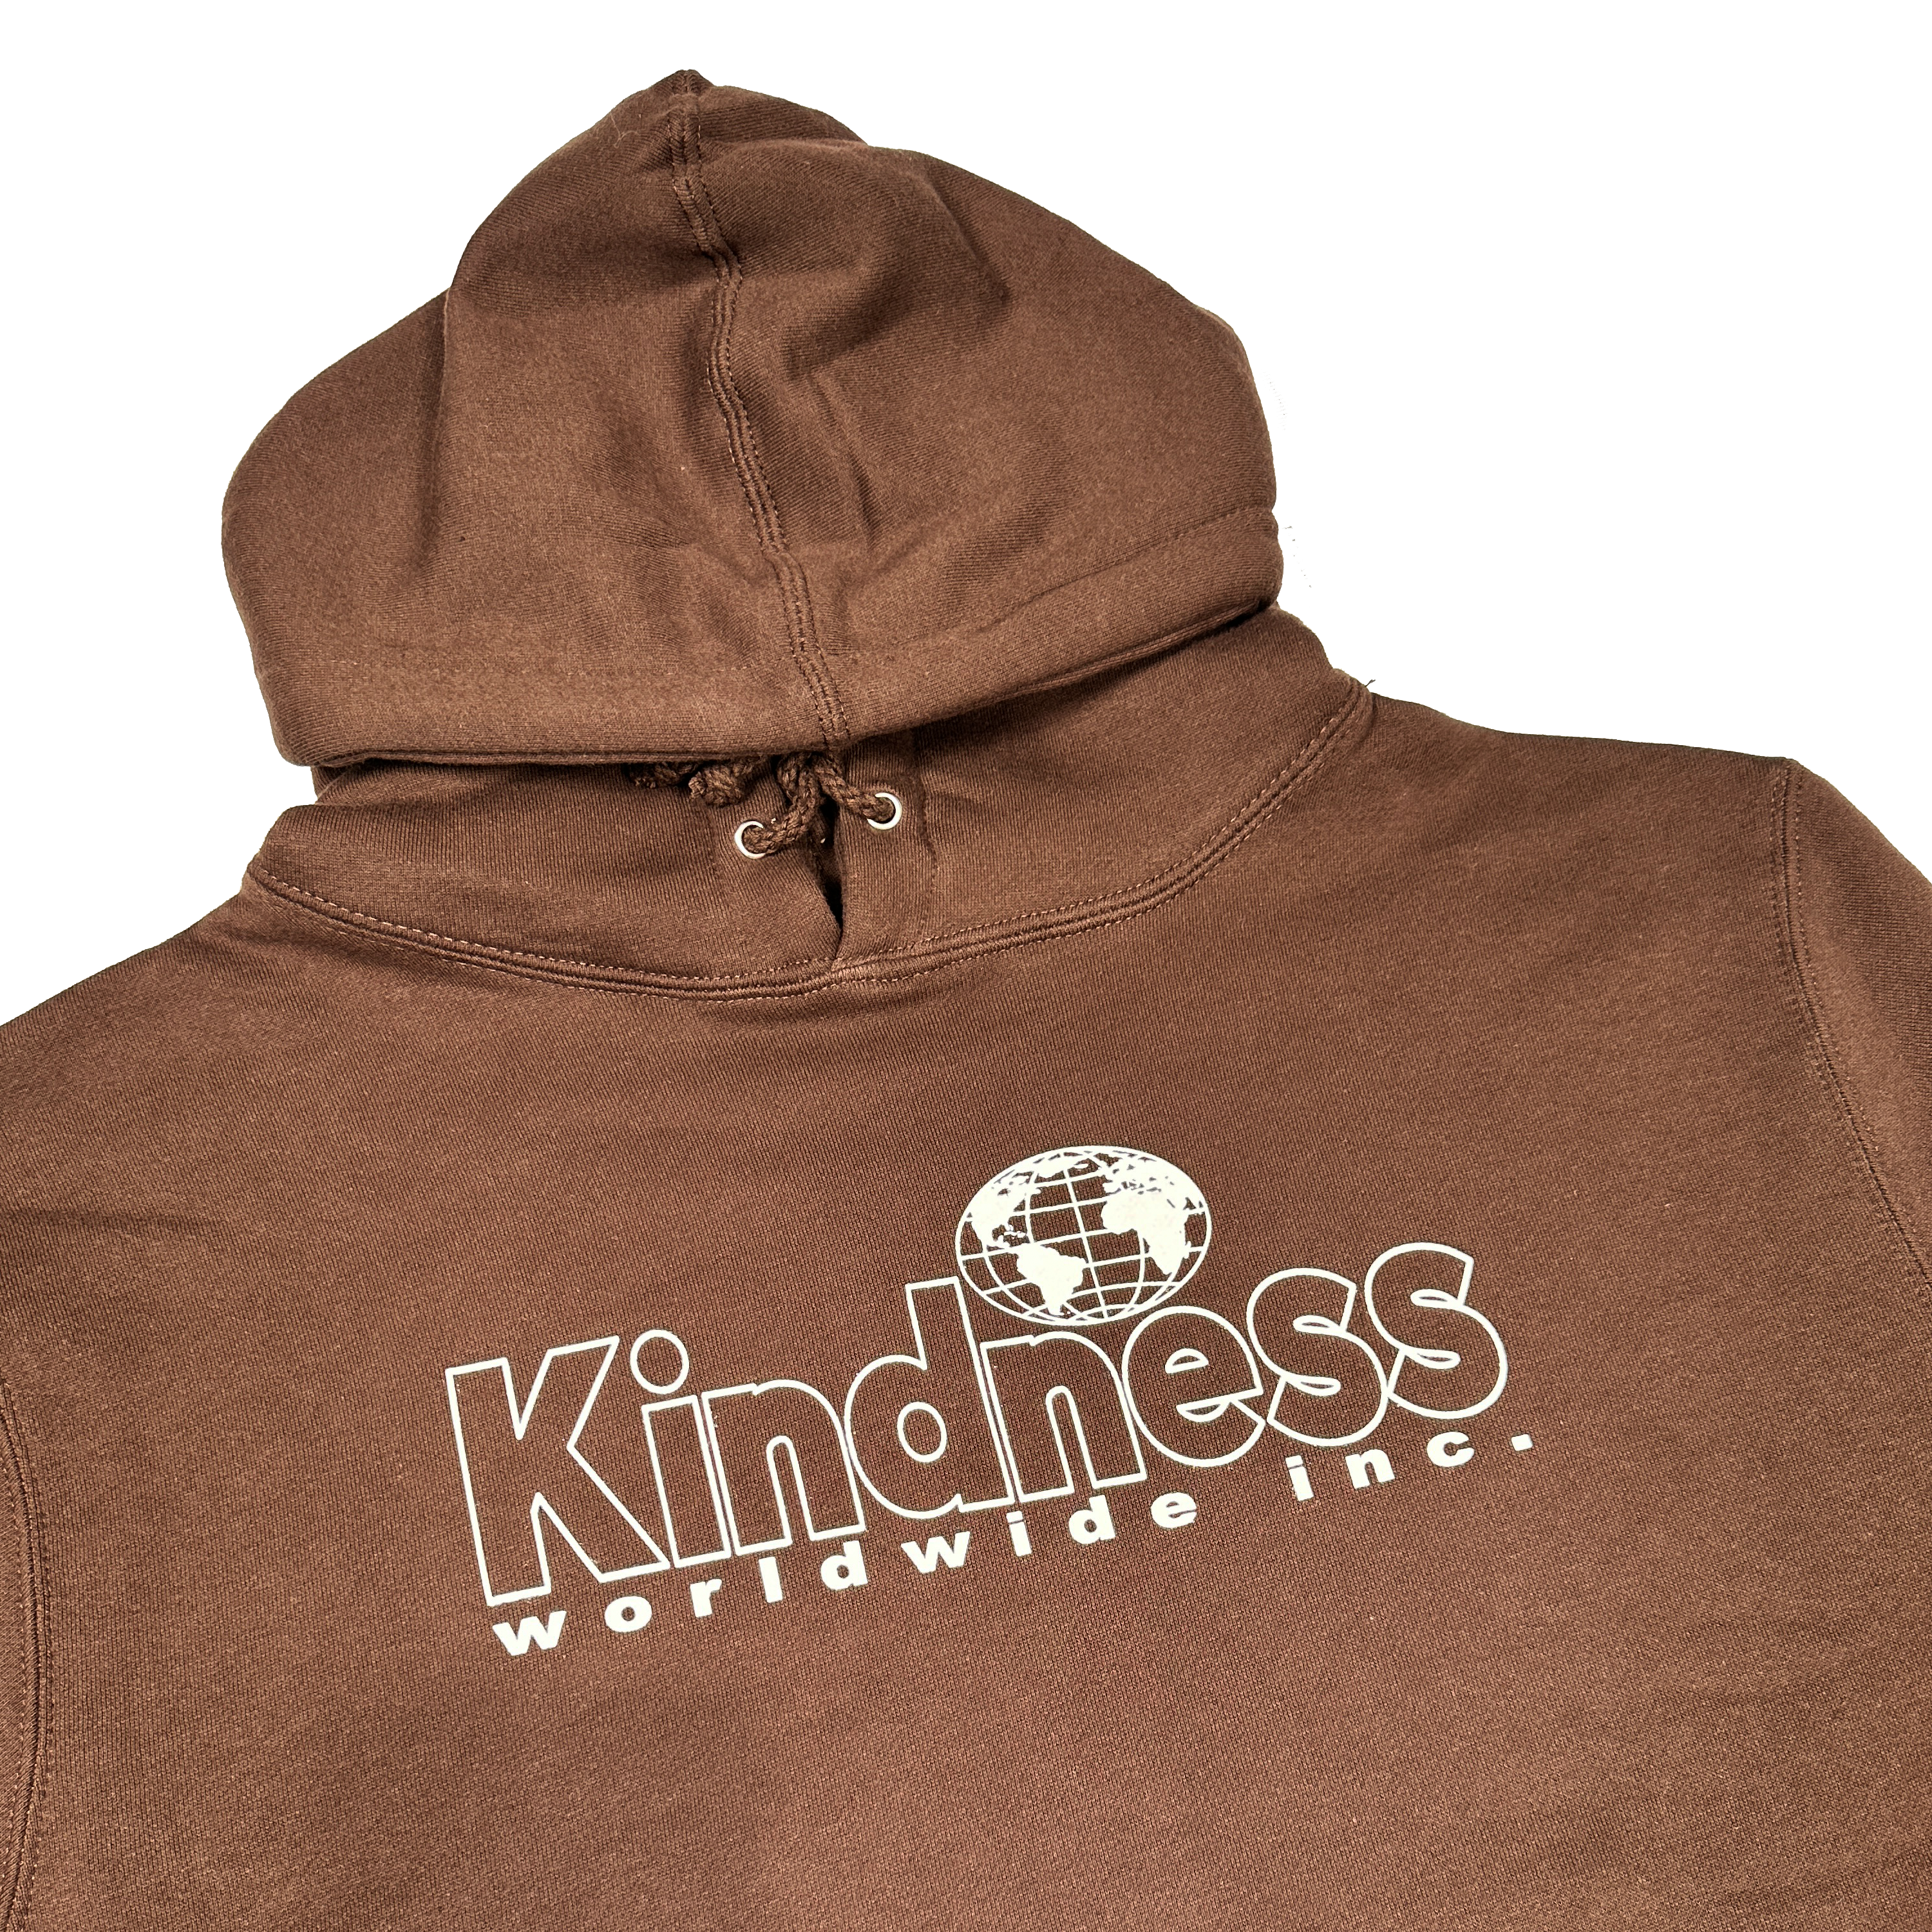 SALE - The Kindness All Terrain Heavyweight Hooded Sweatshirt